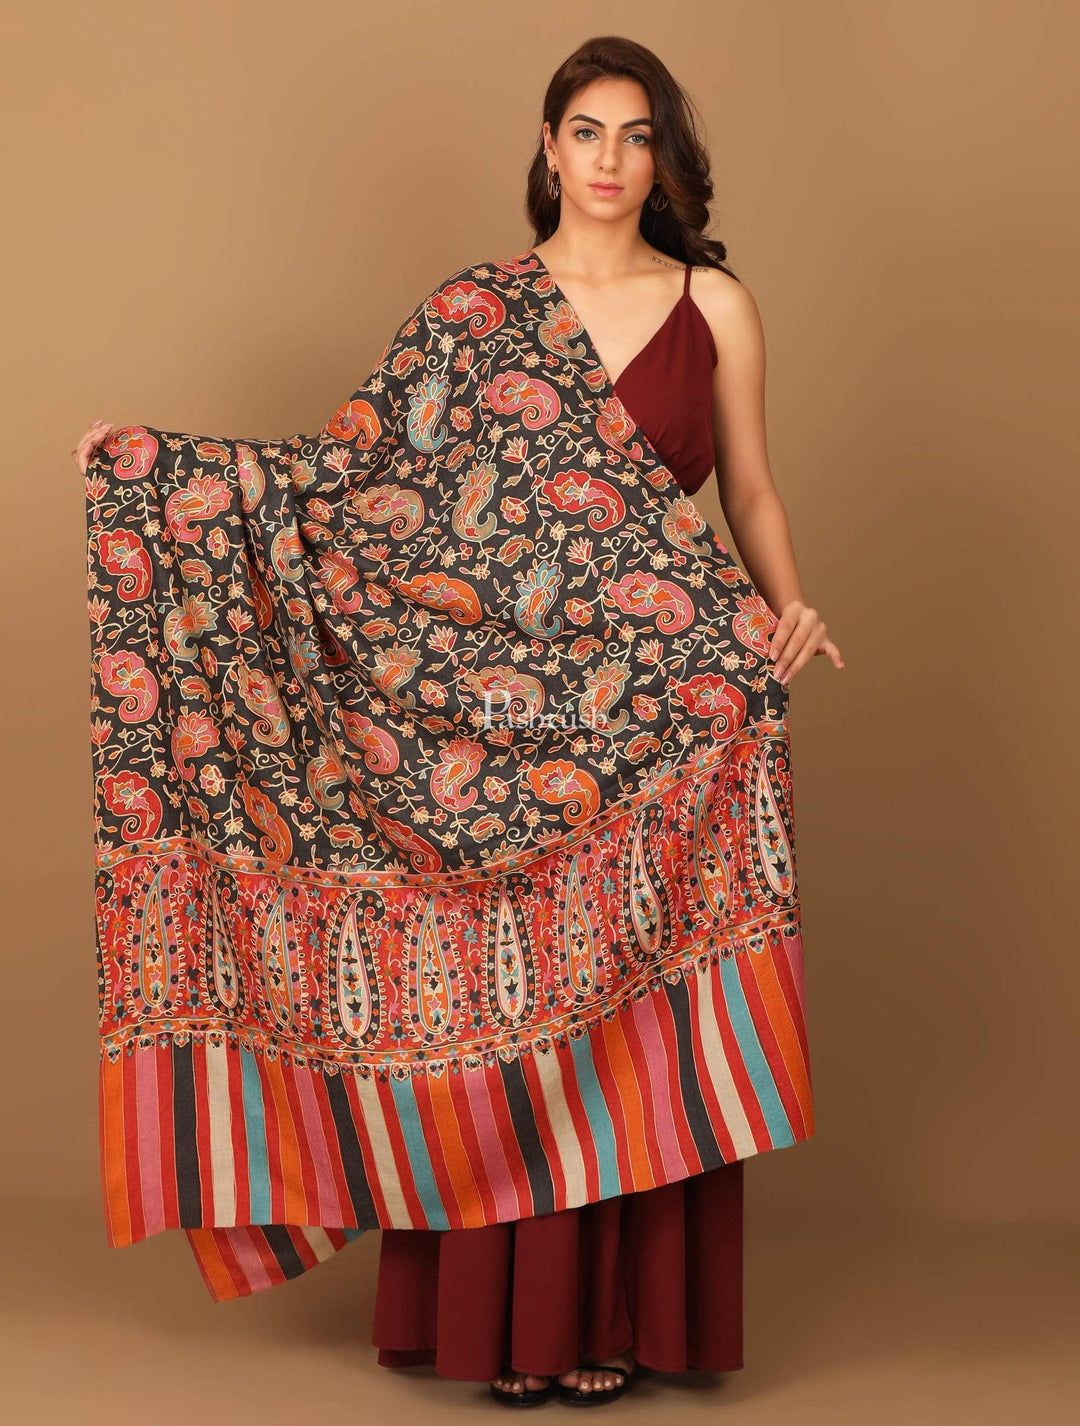 Pashtush India 114x228 Pashtush Womens Kalamkari Outline Embroidery Shawl, Kaani Painted Design, Grey and Black